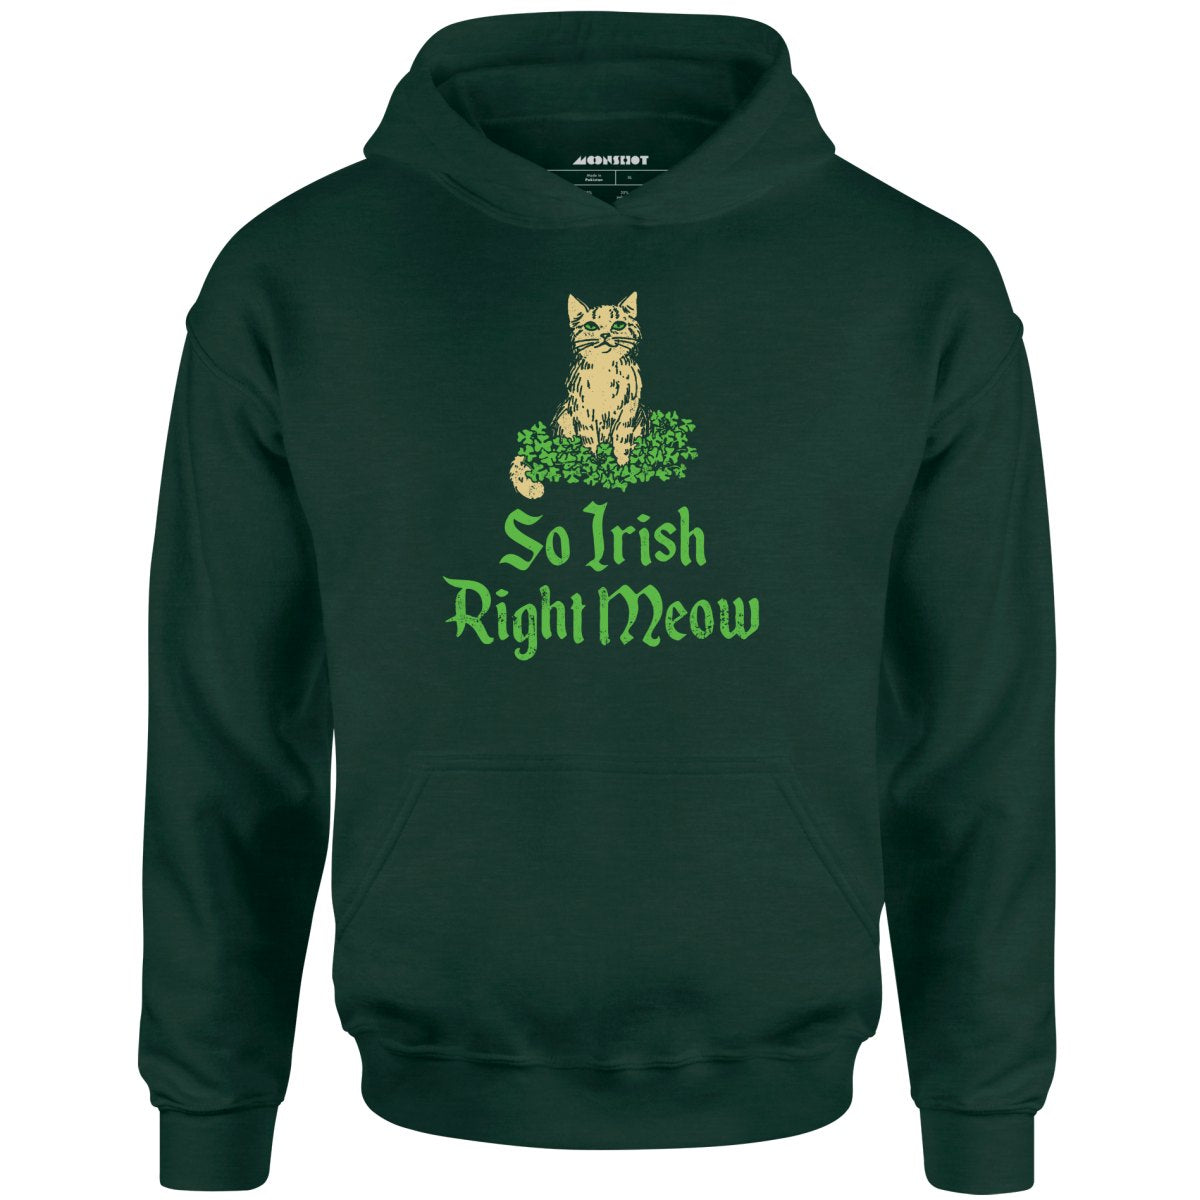 So Irish Right Meow - Unisex Hoodie